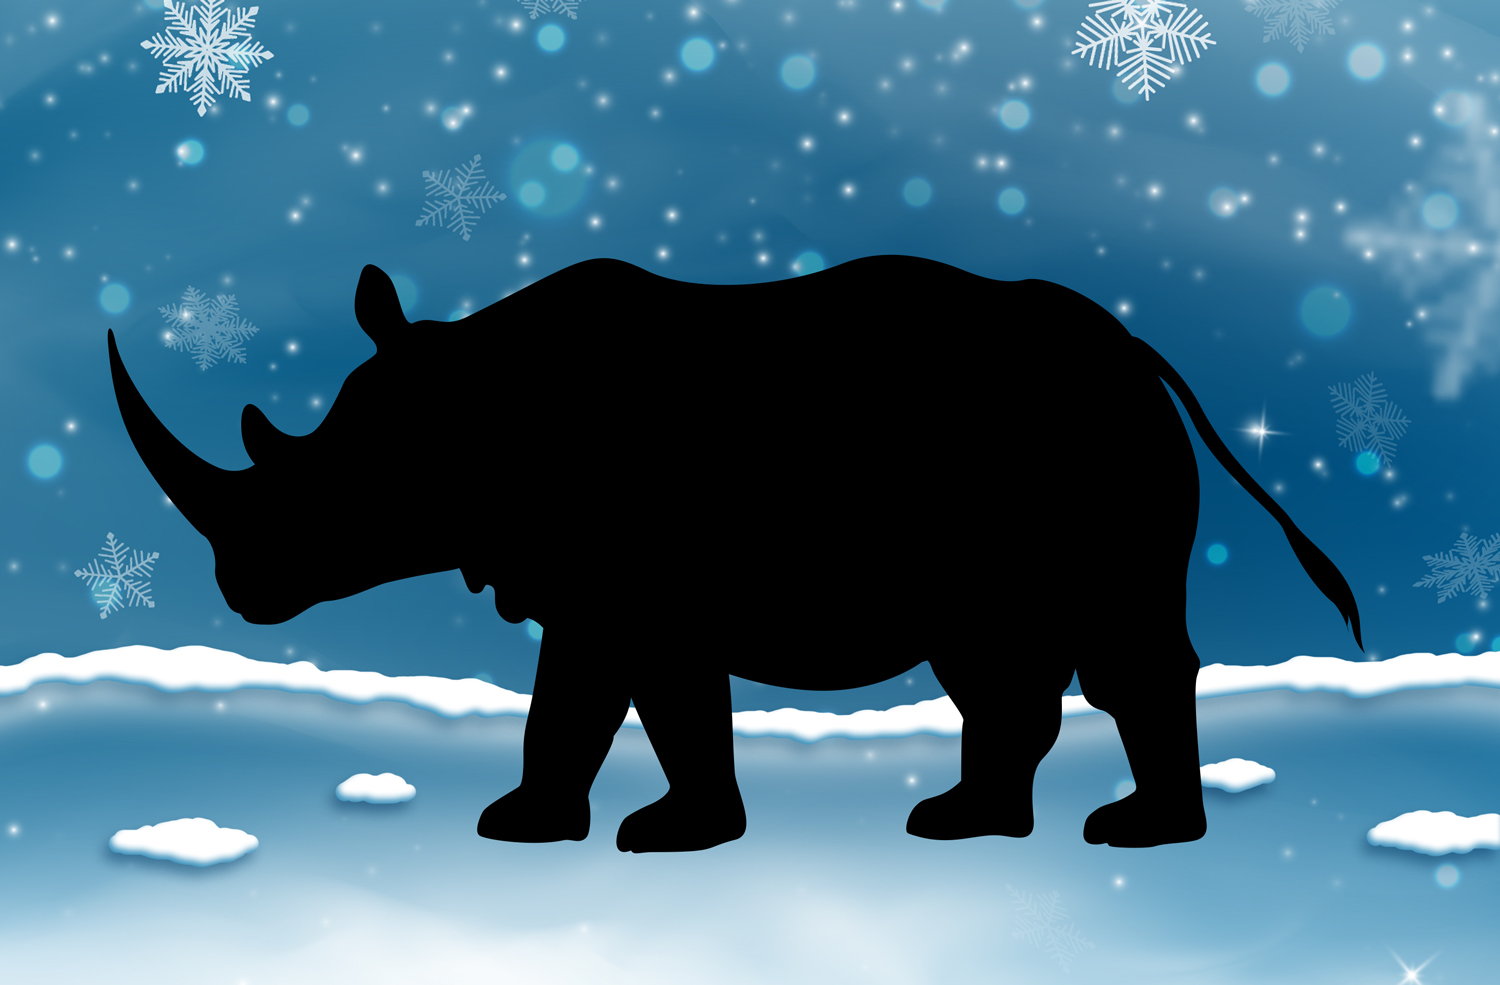 Snow scene with black rhino shape in Photoshop